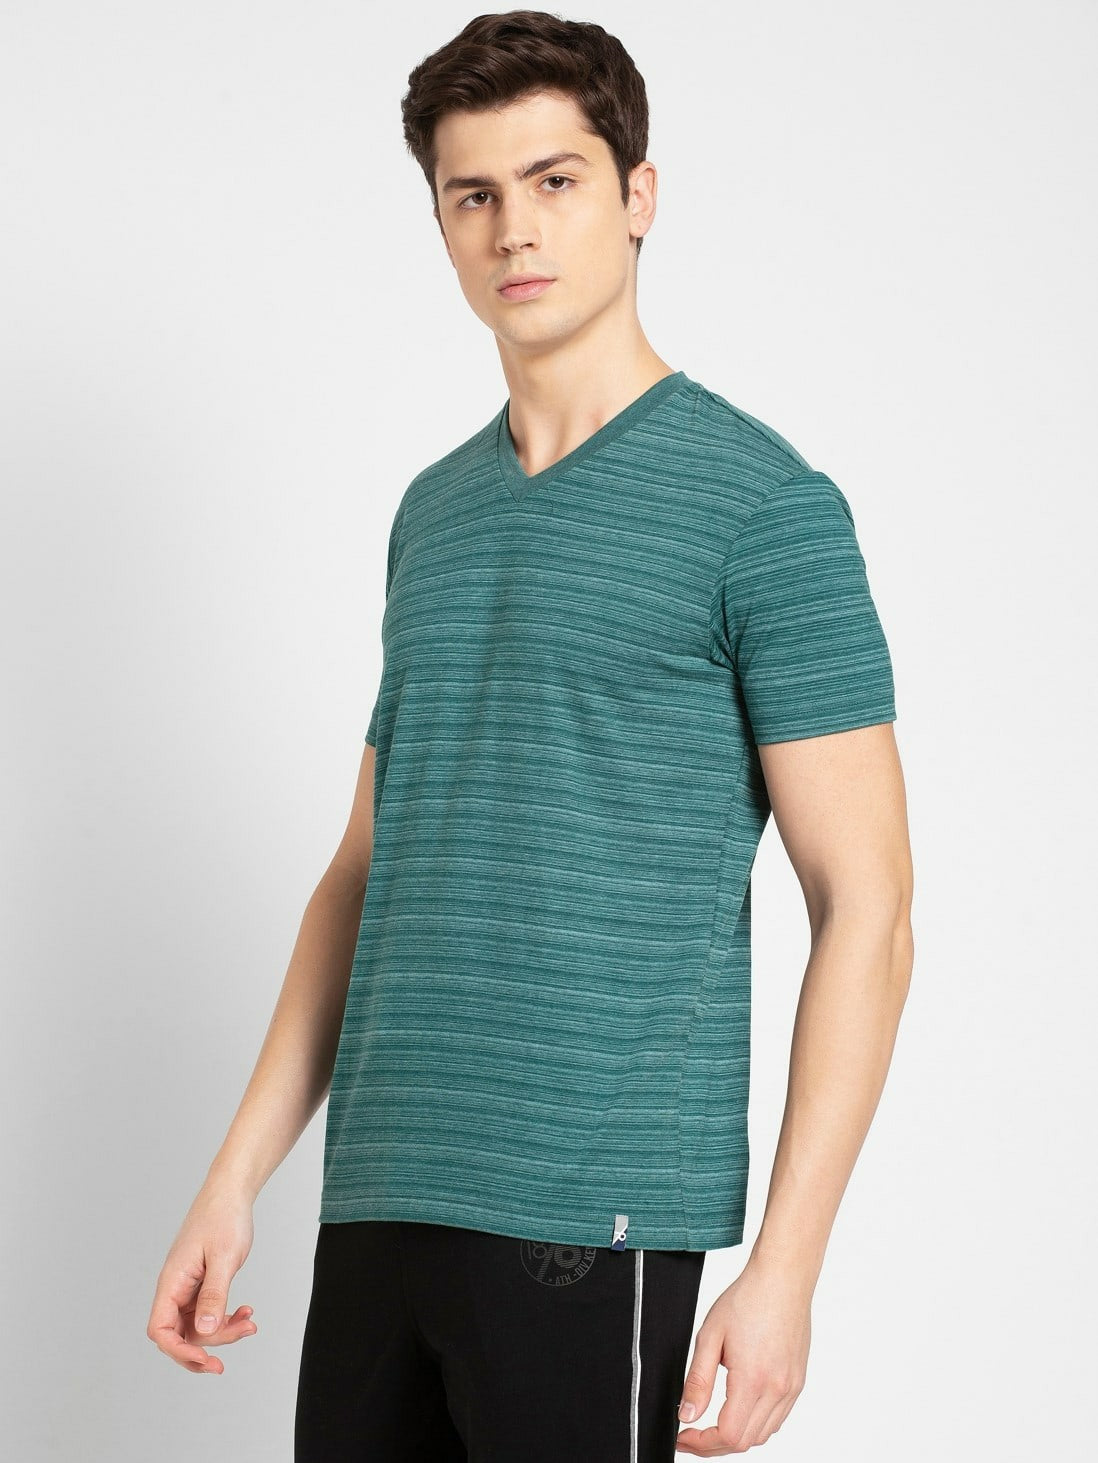 Men's Pacific Green V-neck T-Shirt